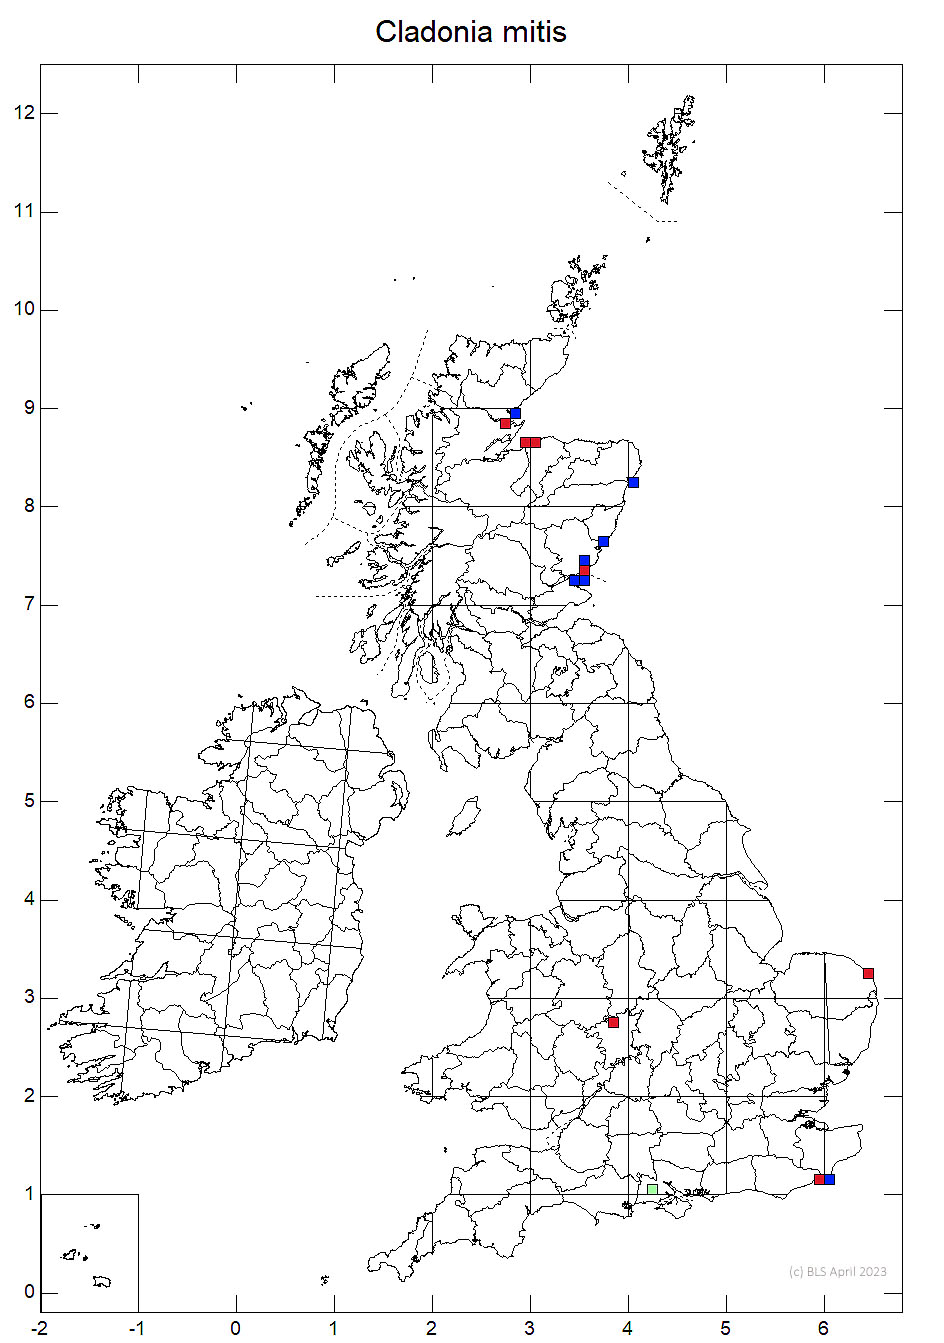 Cladonia mitis 10km sq distributon map